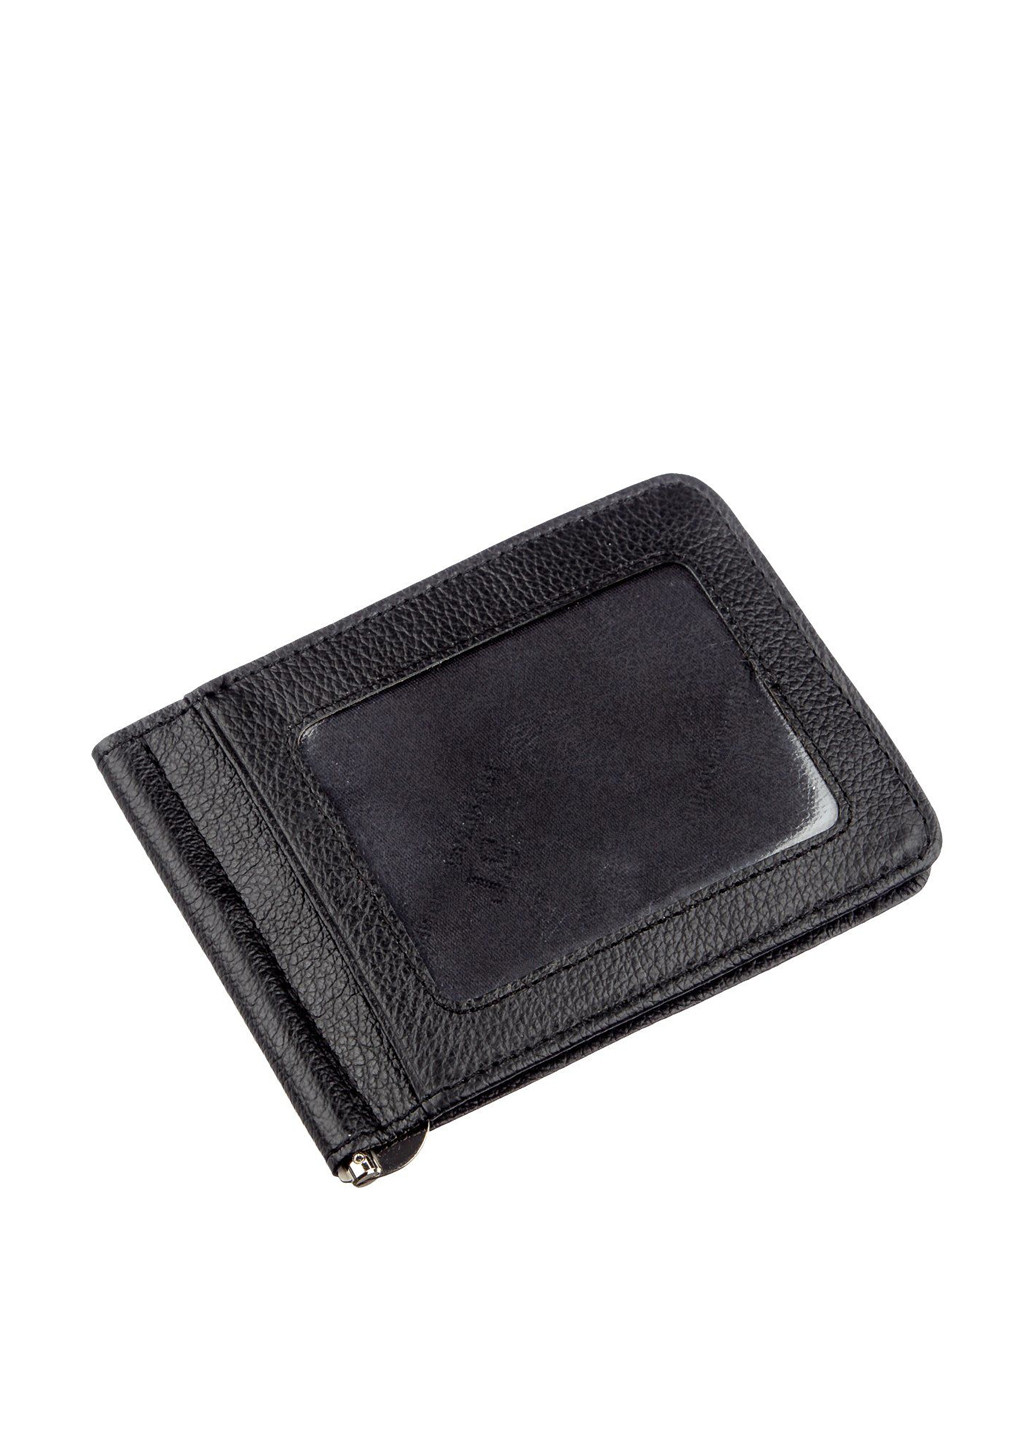 Гаманець ST Leather Accessories (178049132)